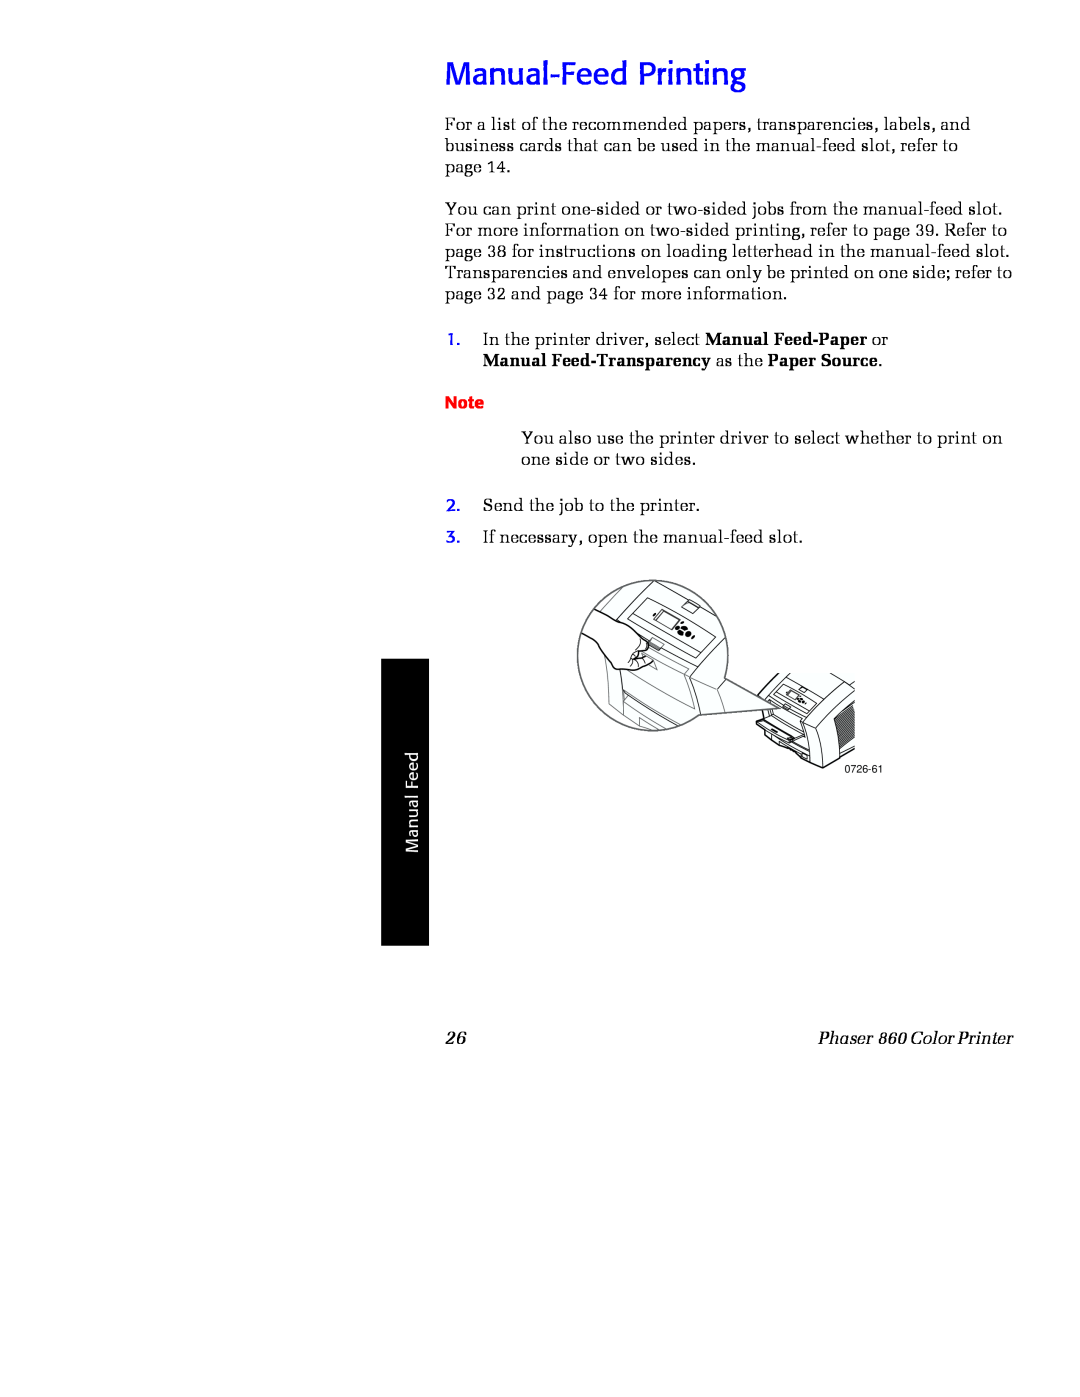 Xerox manual Manual-Feed Printing, Manual Feed, Phaser 860 Color Printer 